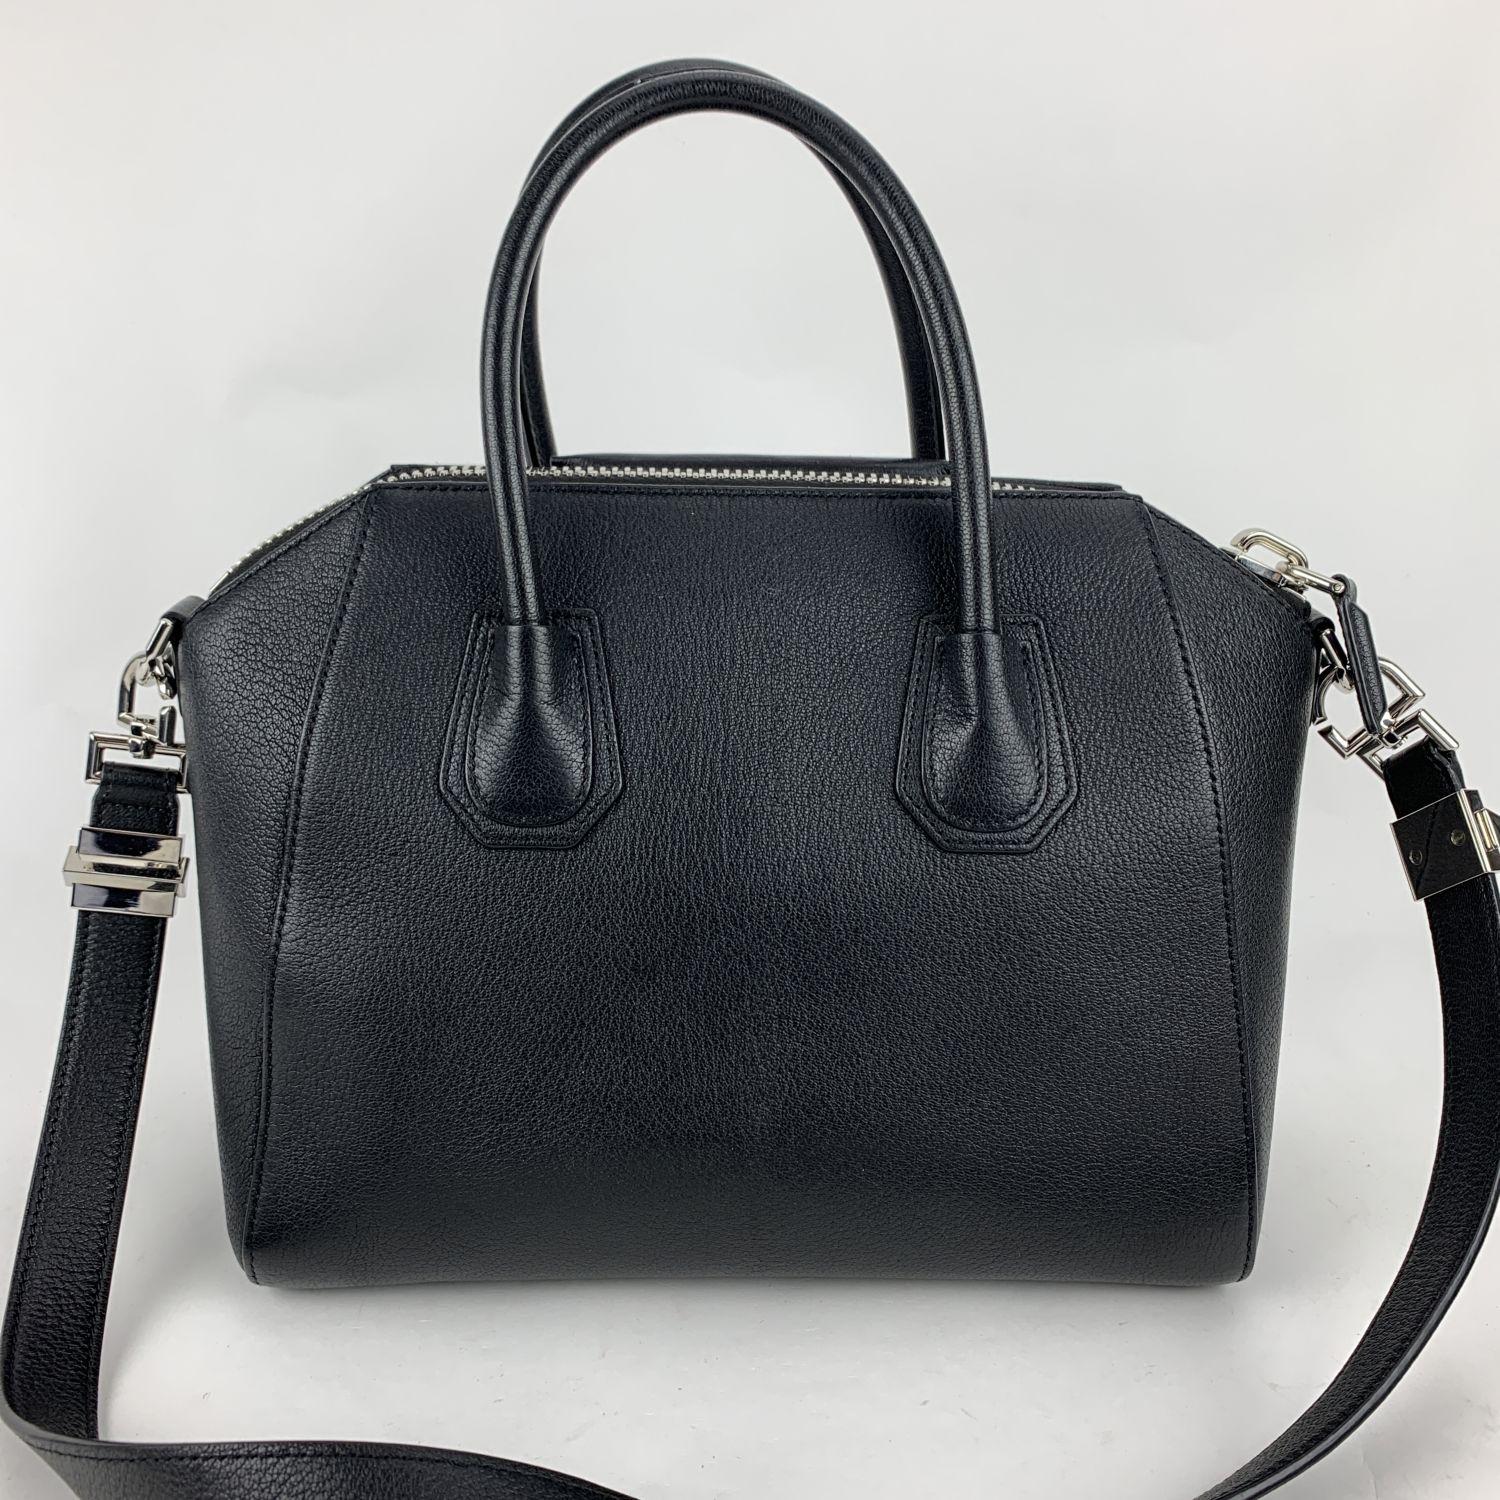 Givenchy Black Leather Small Antigona Bag Satchel Handbag with Strap 1